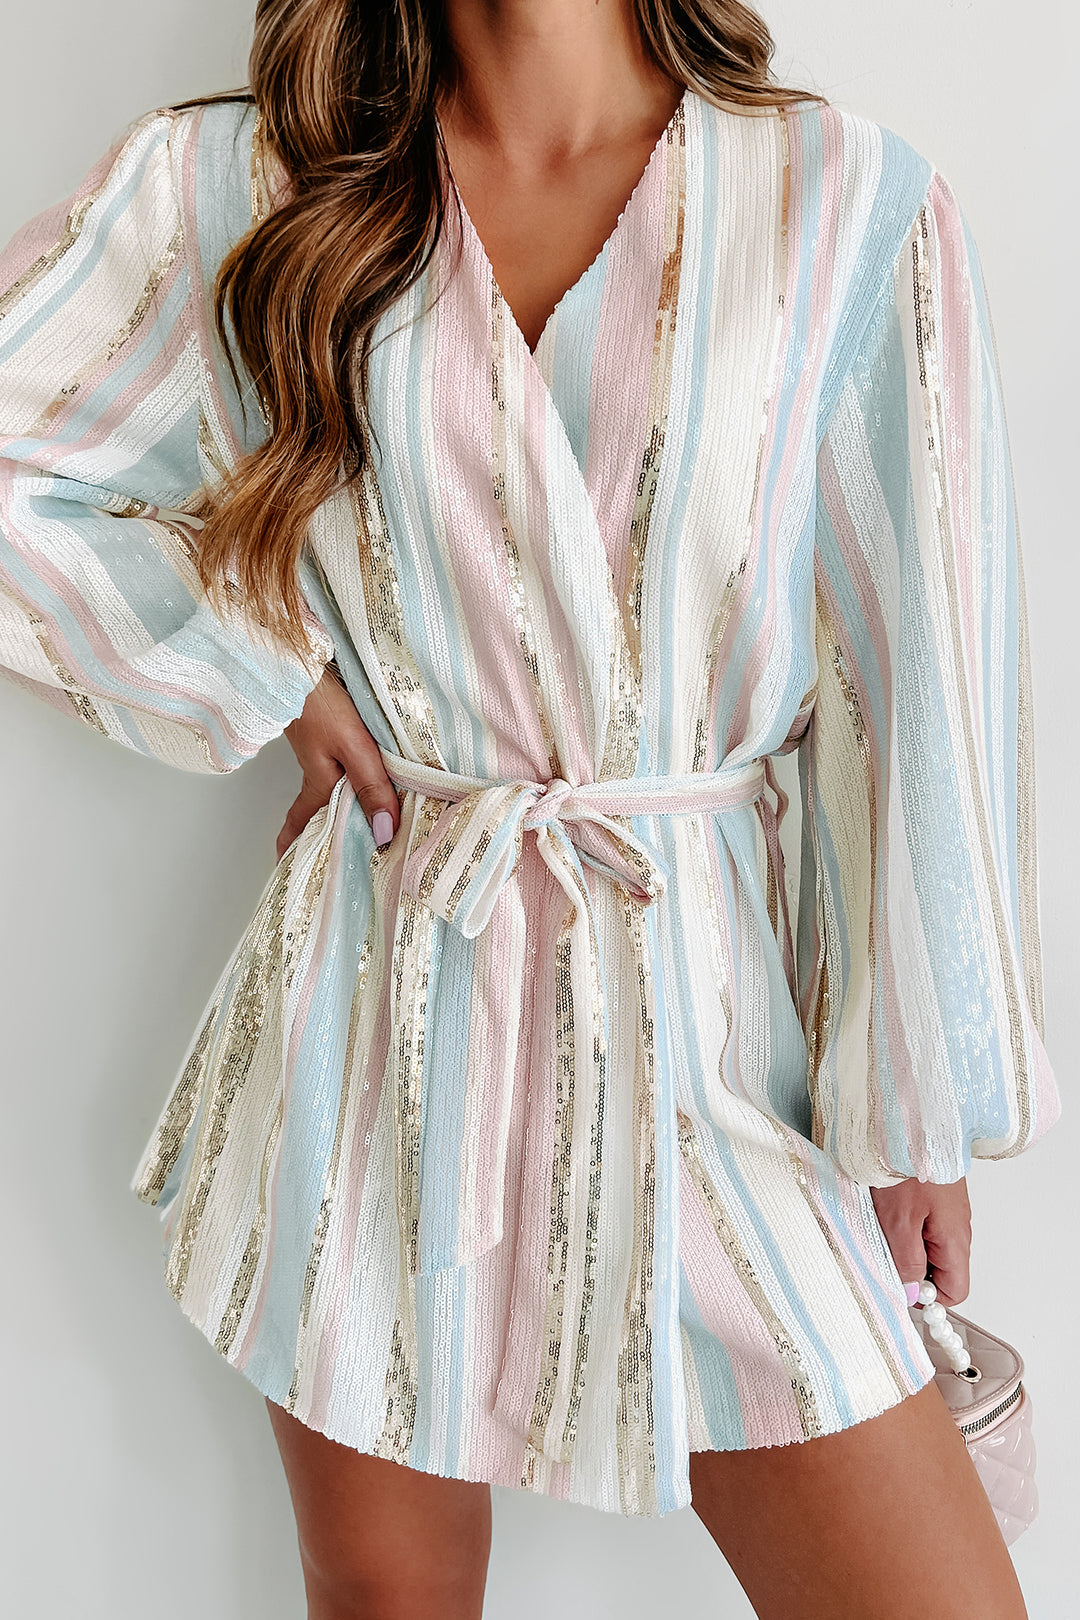 Confidently Extra Striped Sequin Wrap Dress (Multi) - NanaMacs